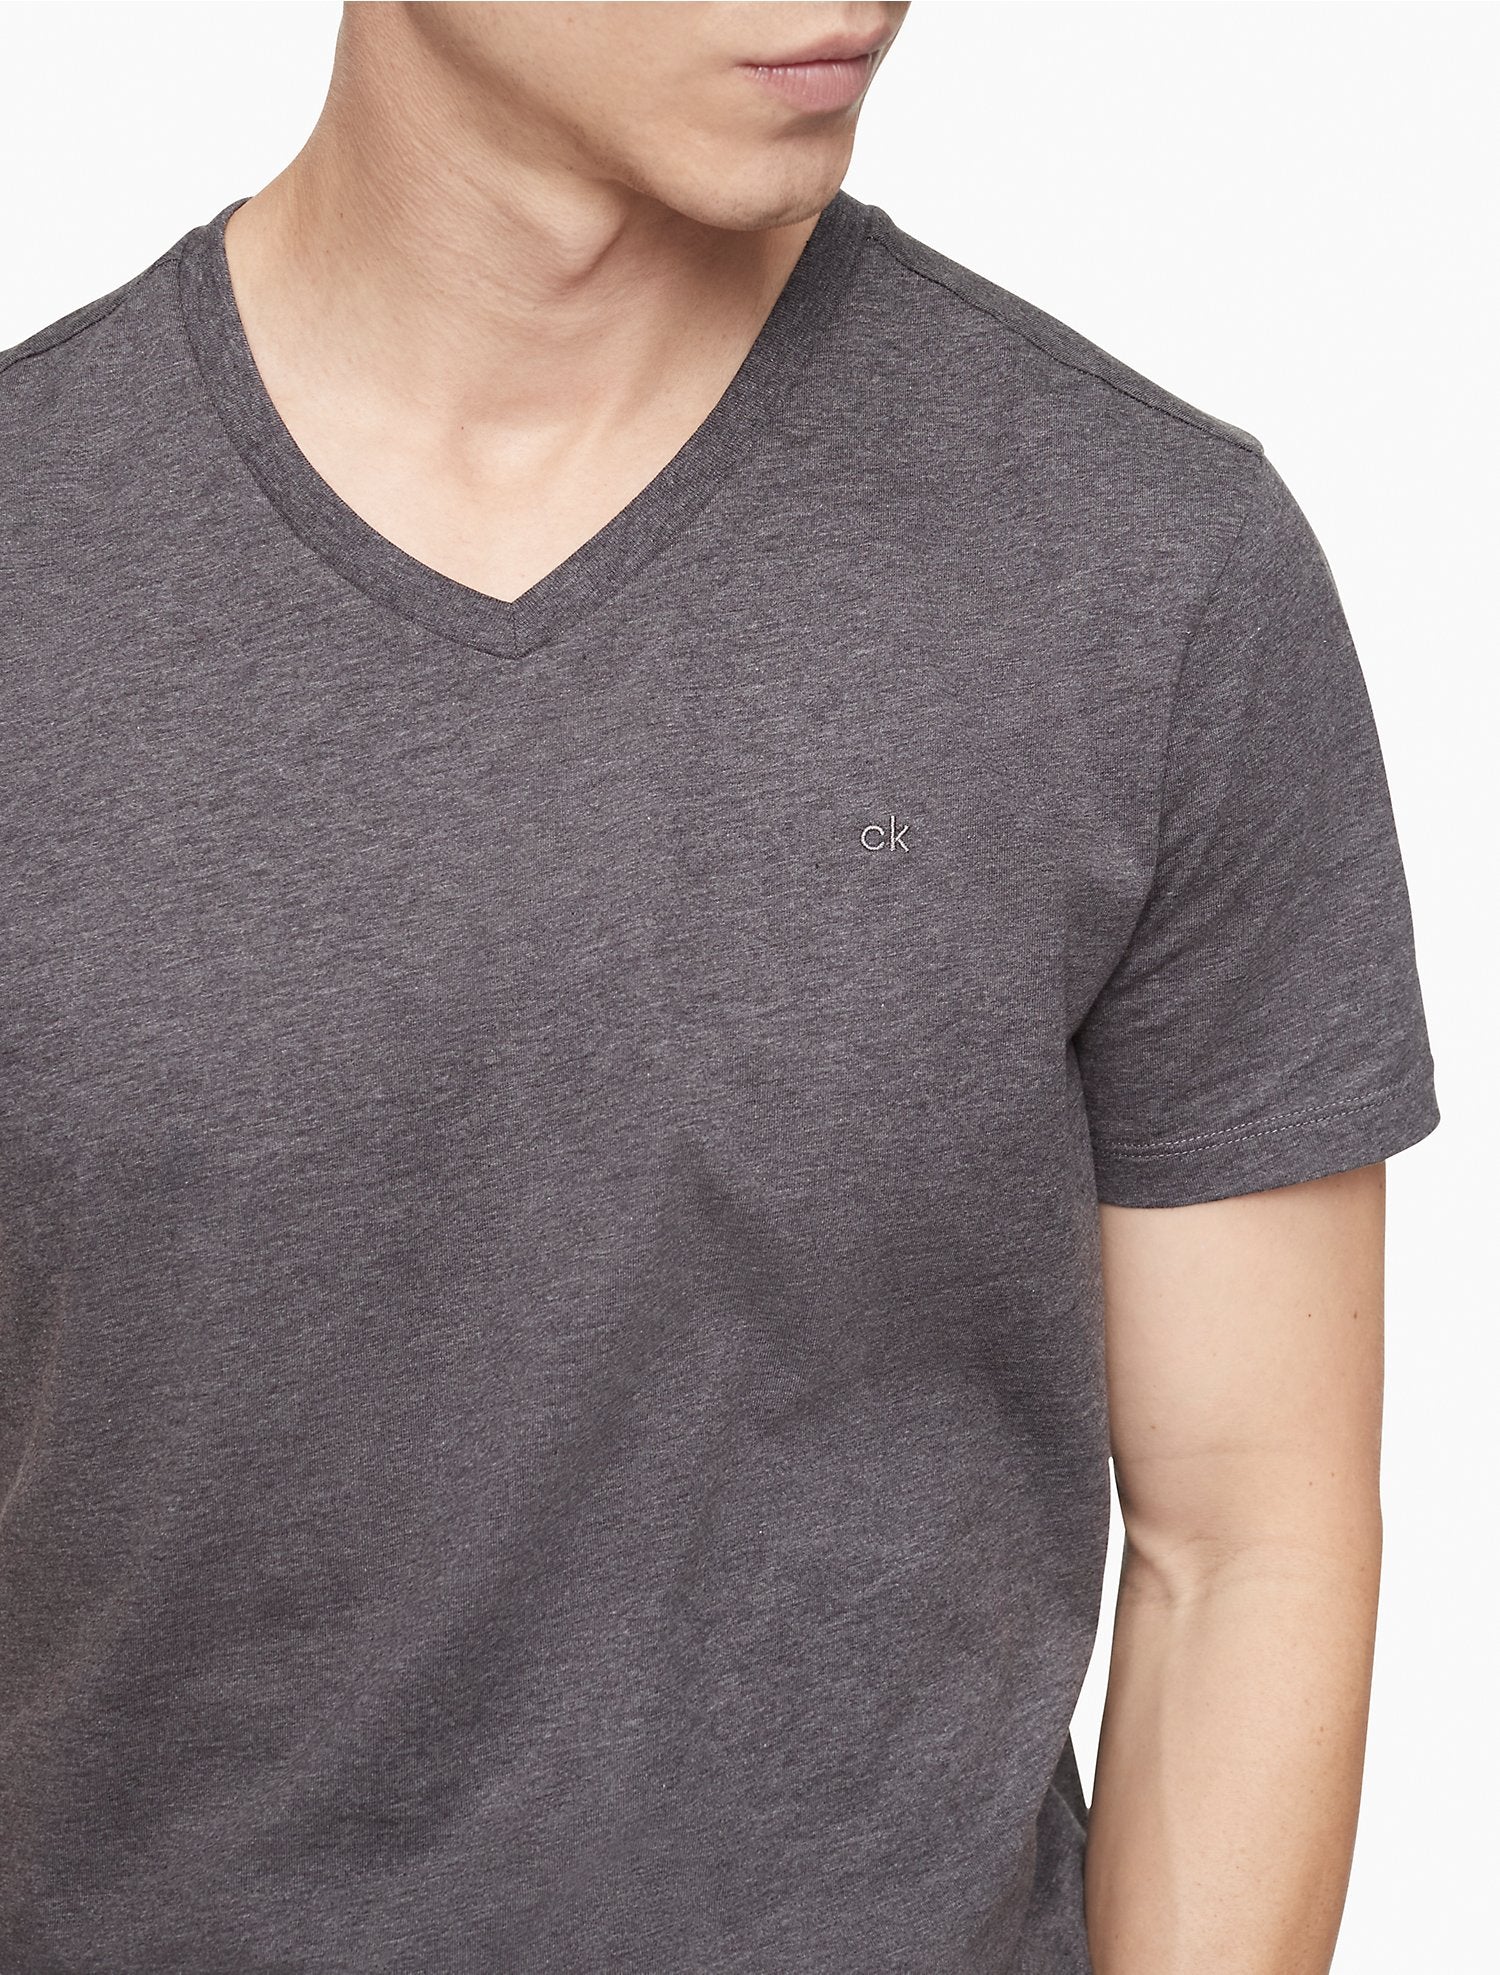 Calvin Klein Liquid Touch Slim Fit V-Neck Logo T-Shirt - Men